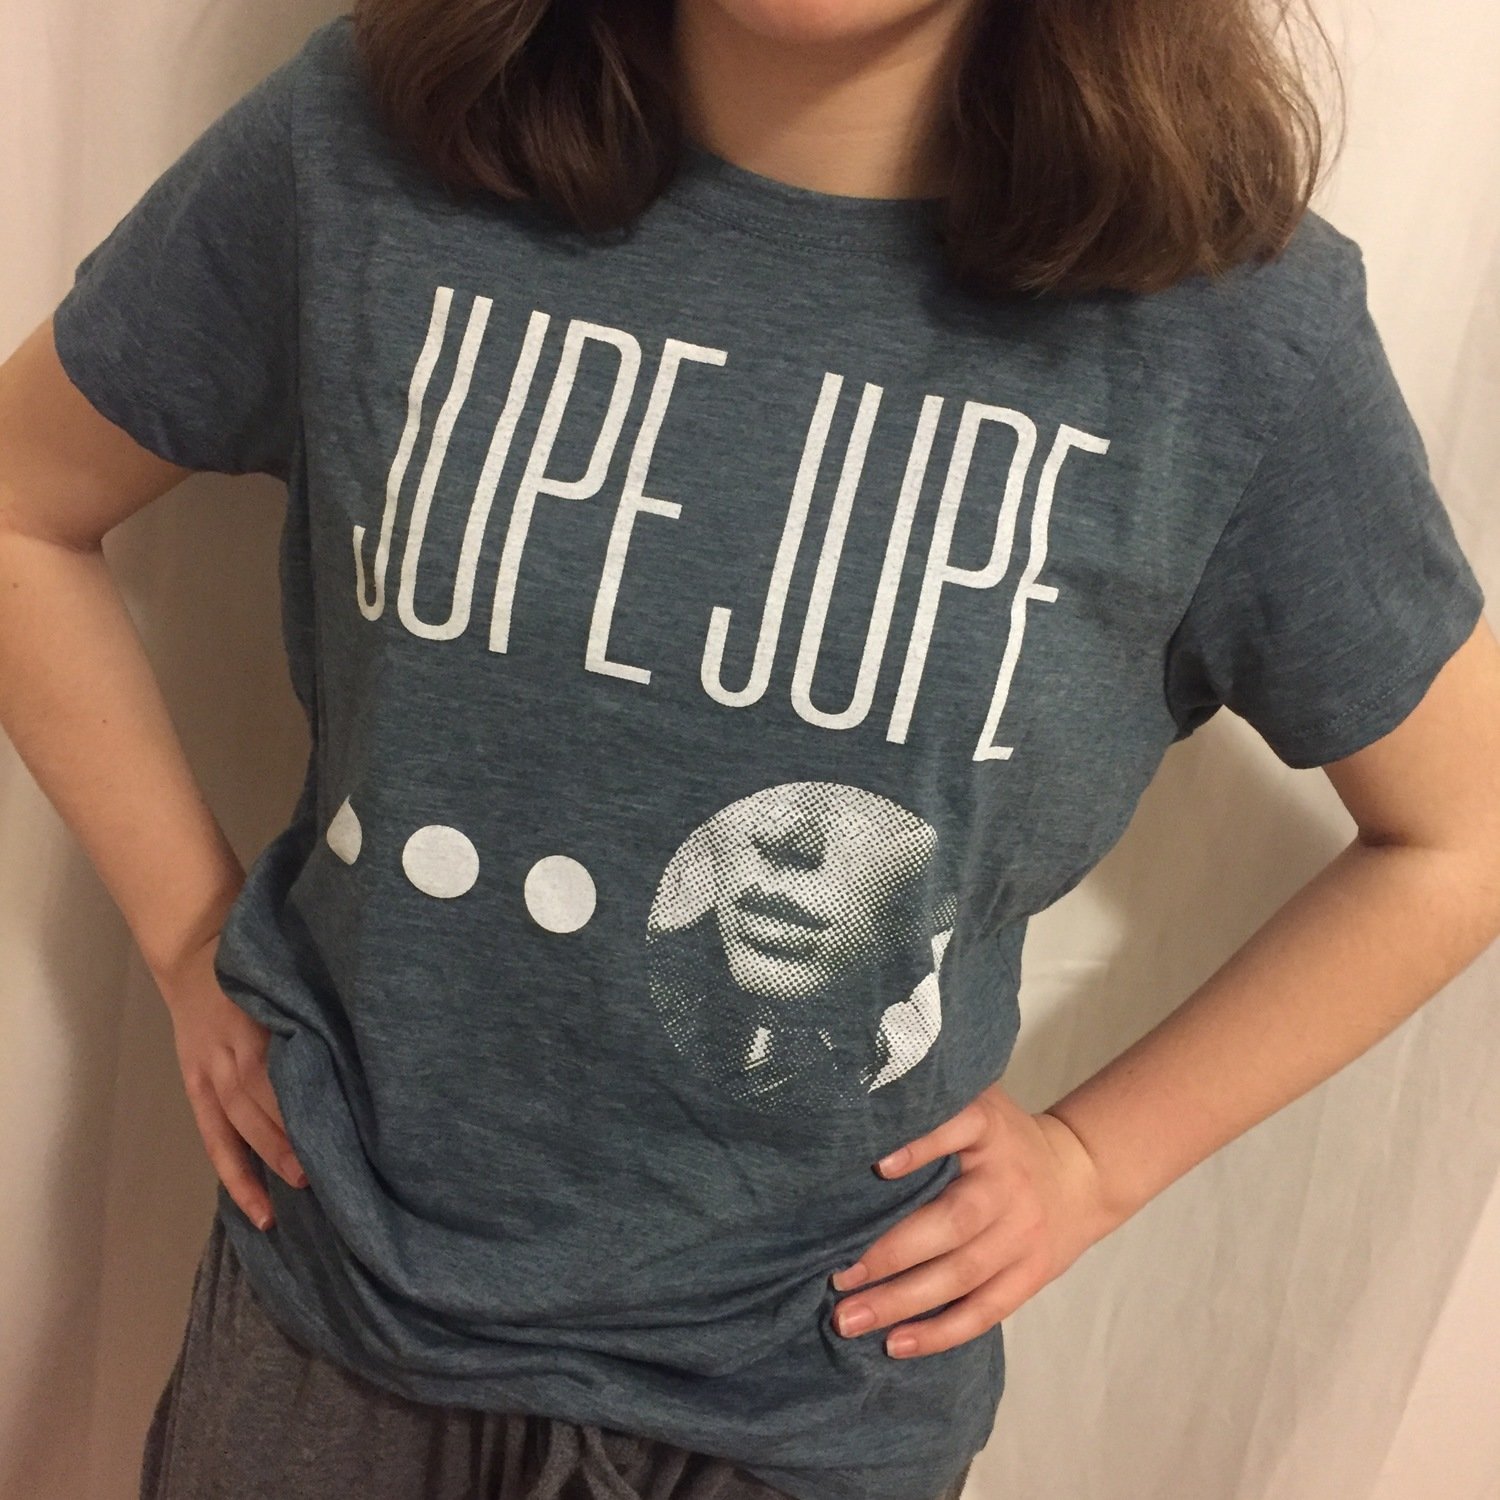 Jupe Jupe "Talking" Womens T-shirt